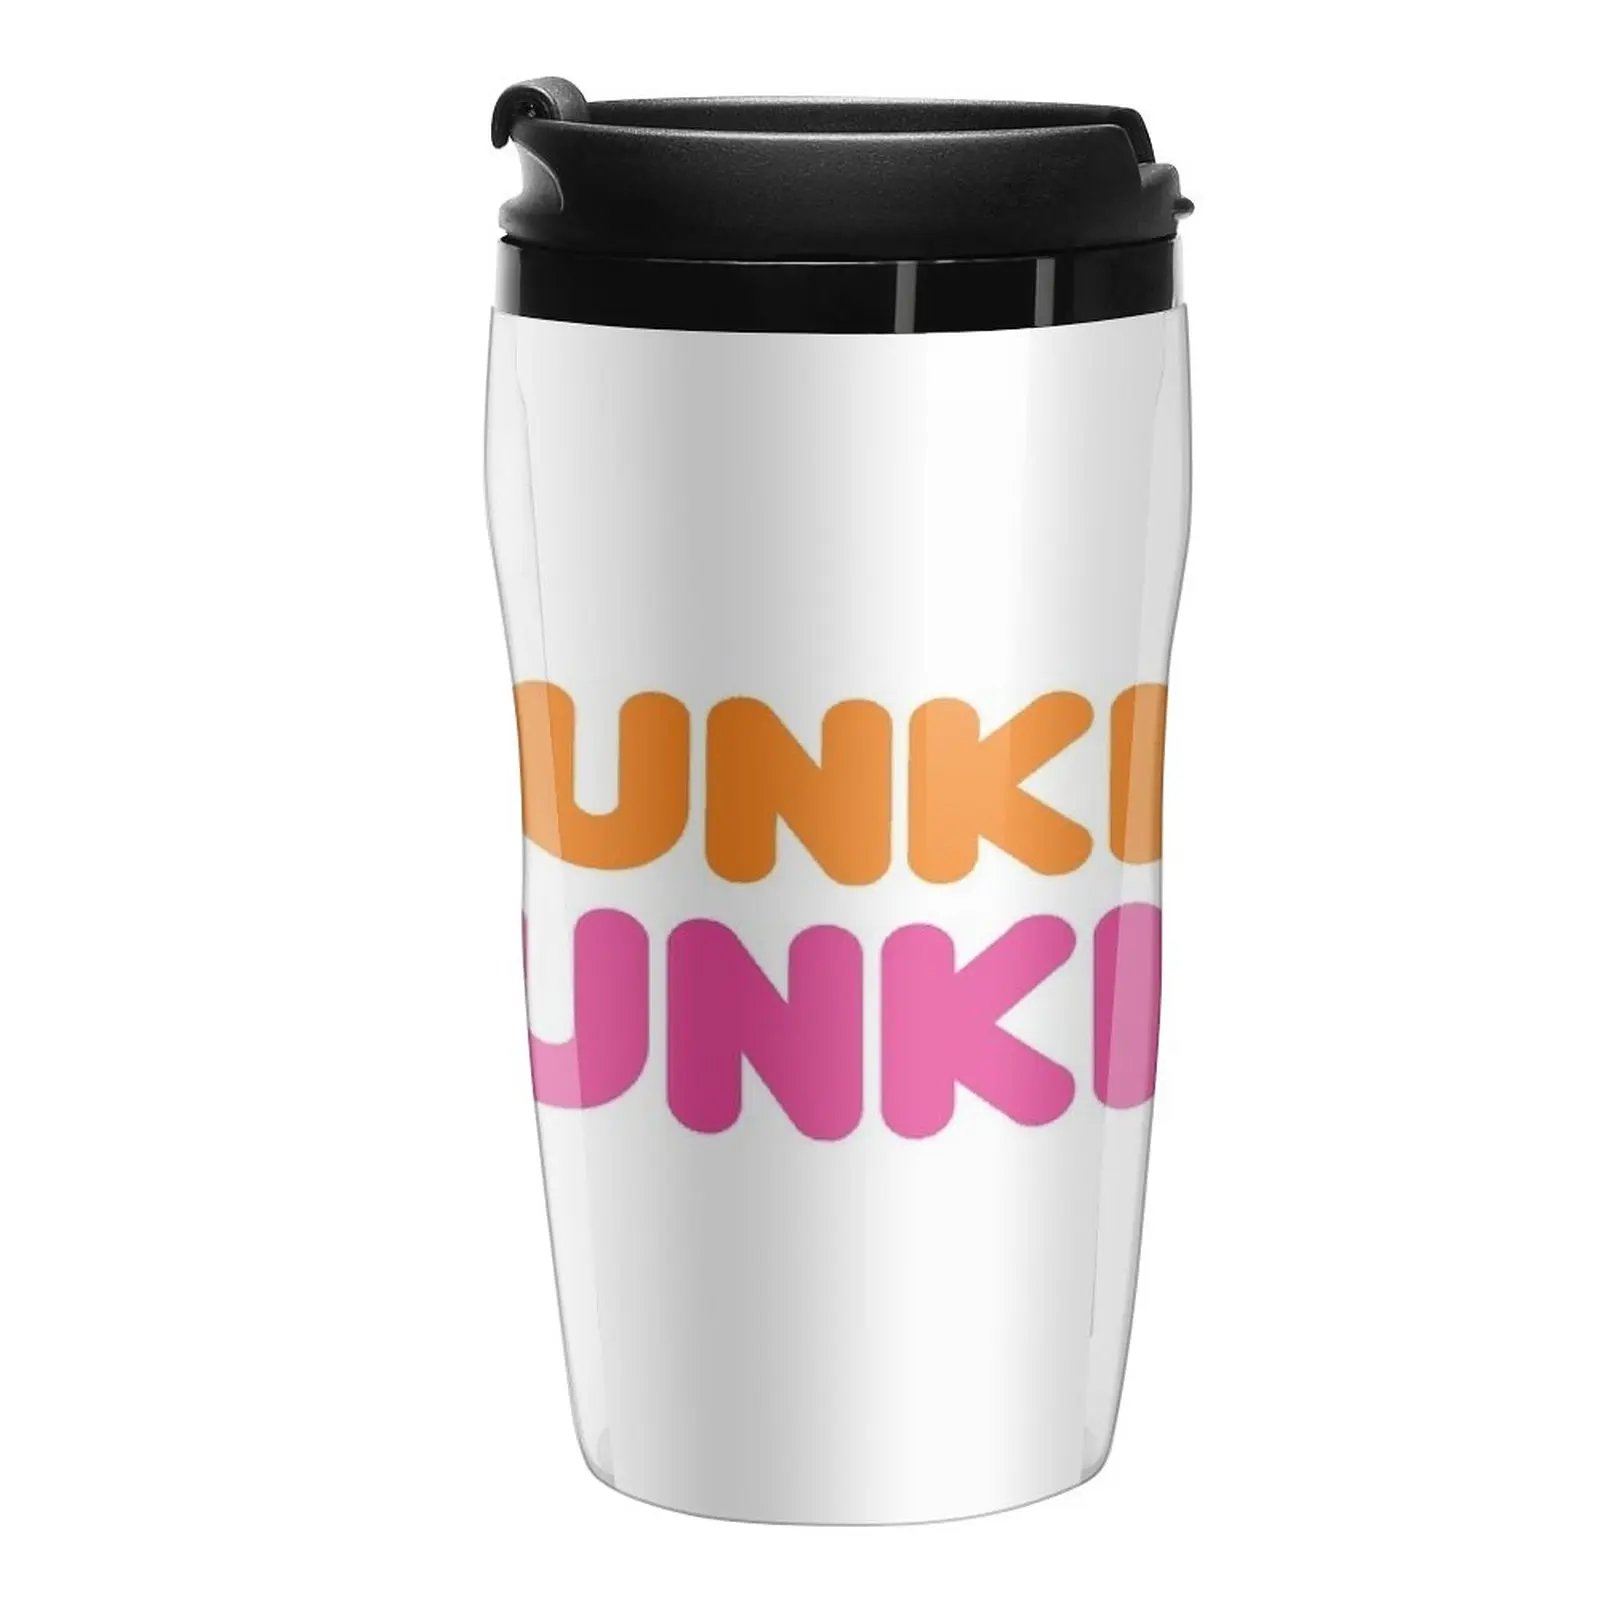 

New Dunkie Junkie Travel Coffee Mug Coffee Cups Large Cups For Coffee Espresso Coffee Cups